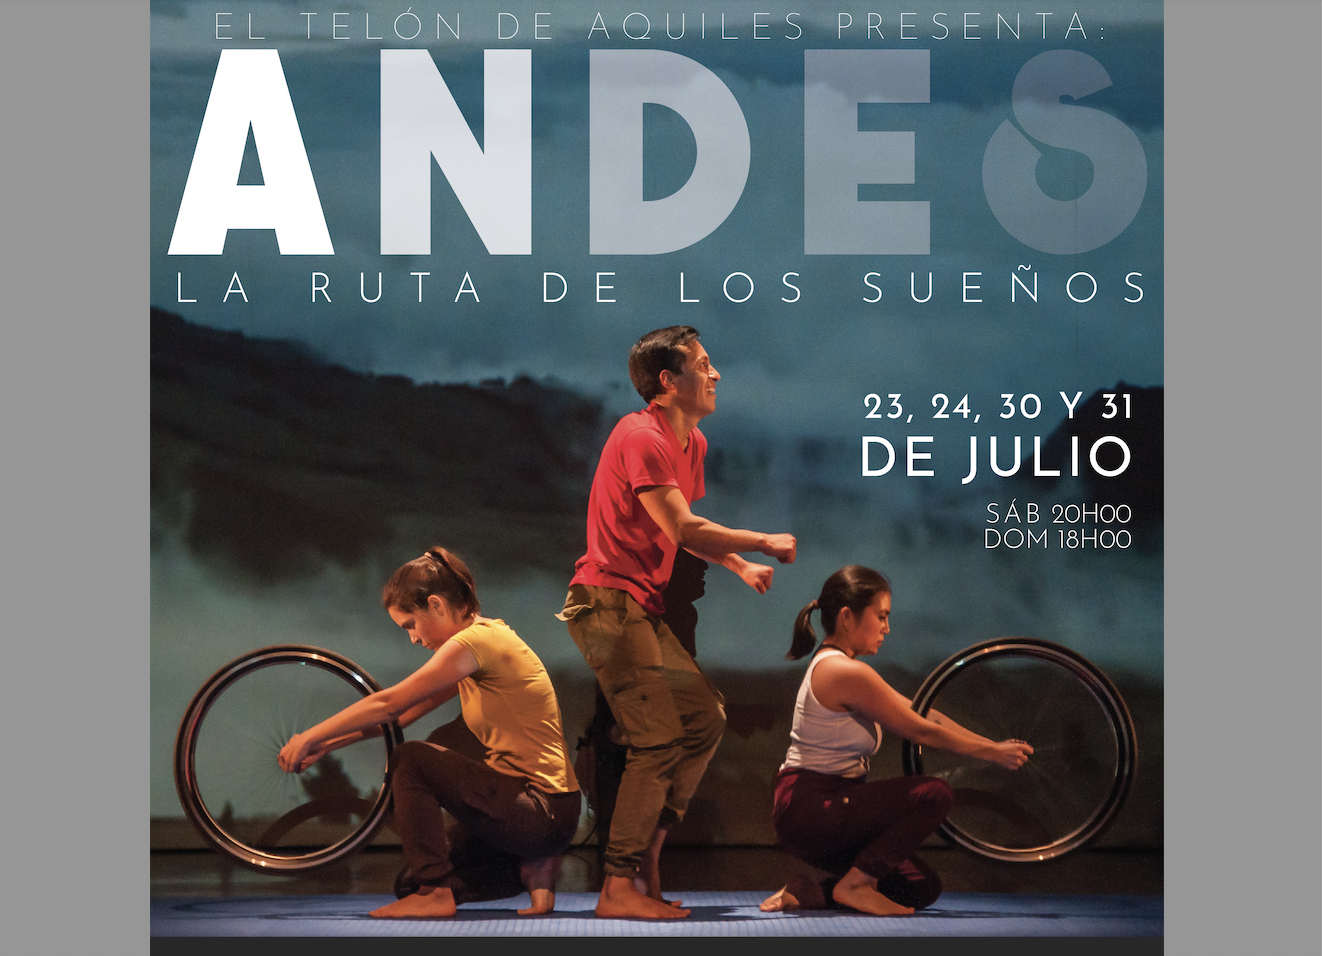 Andes, una obra inspirada en la vida de Richard Carapaz